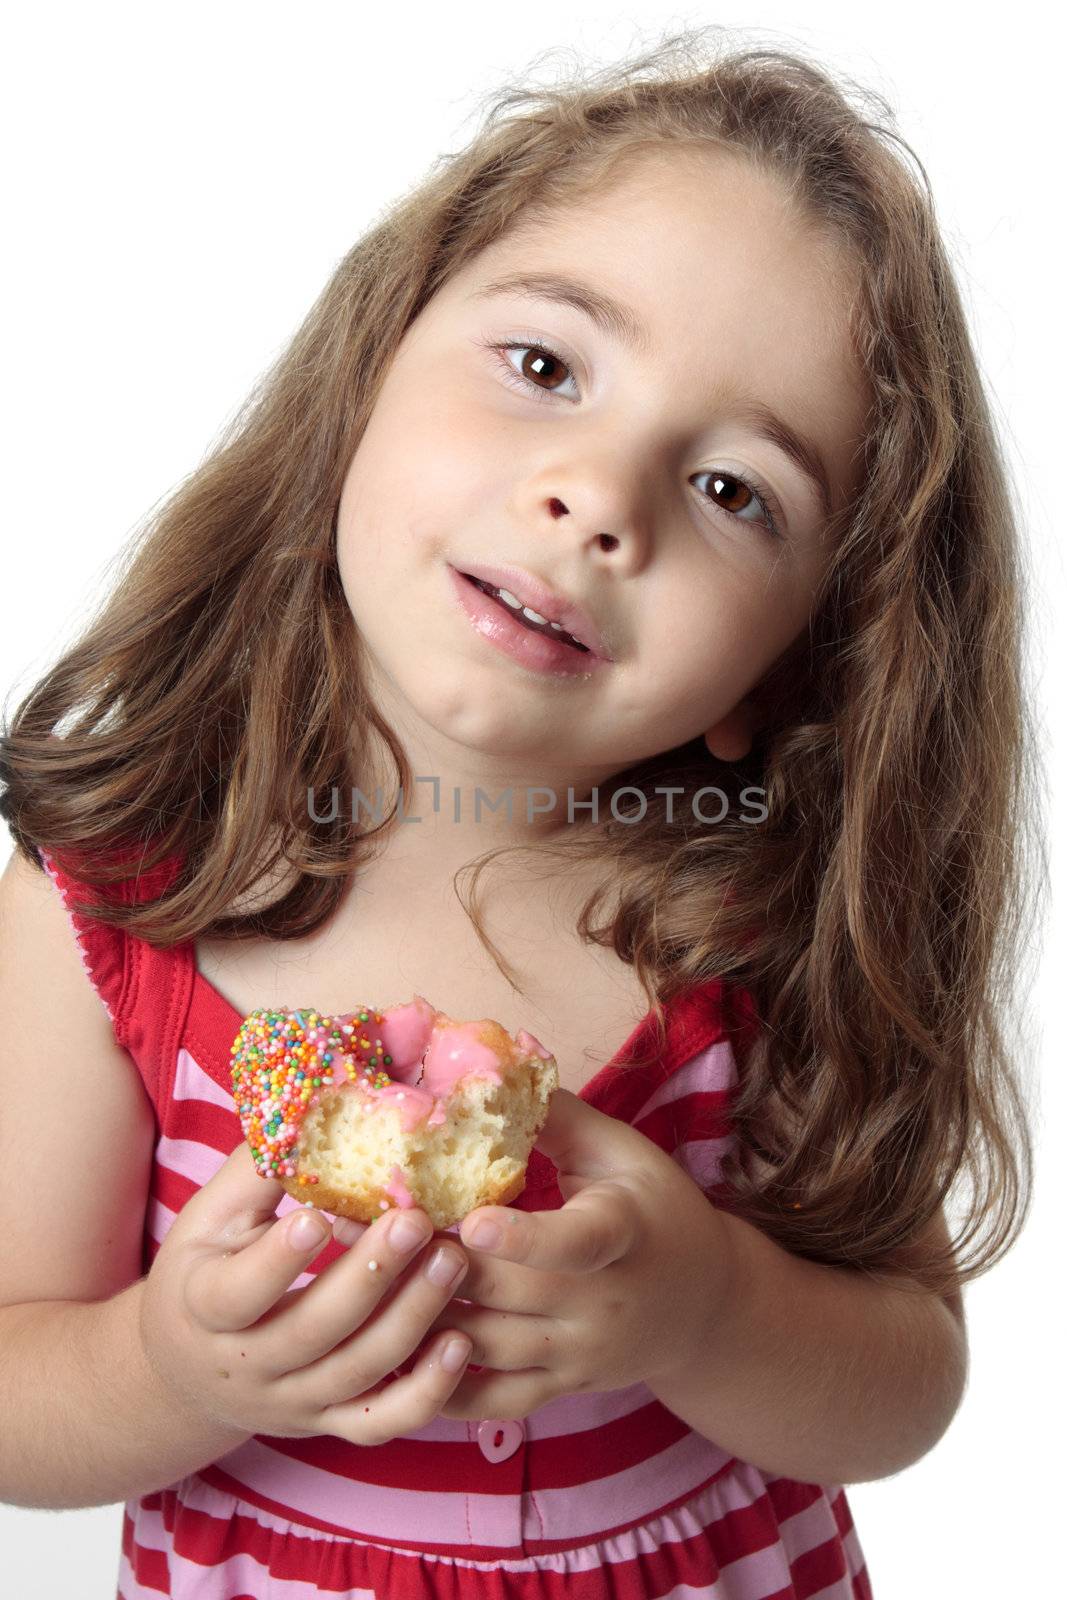 Smiling girl eating snack by lovleah